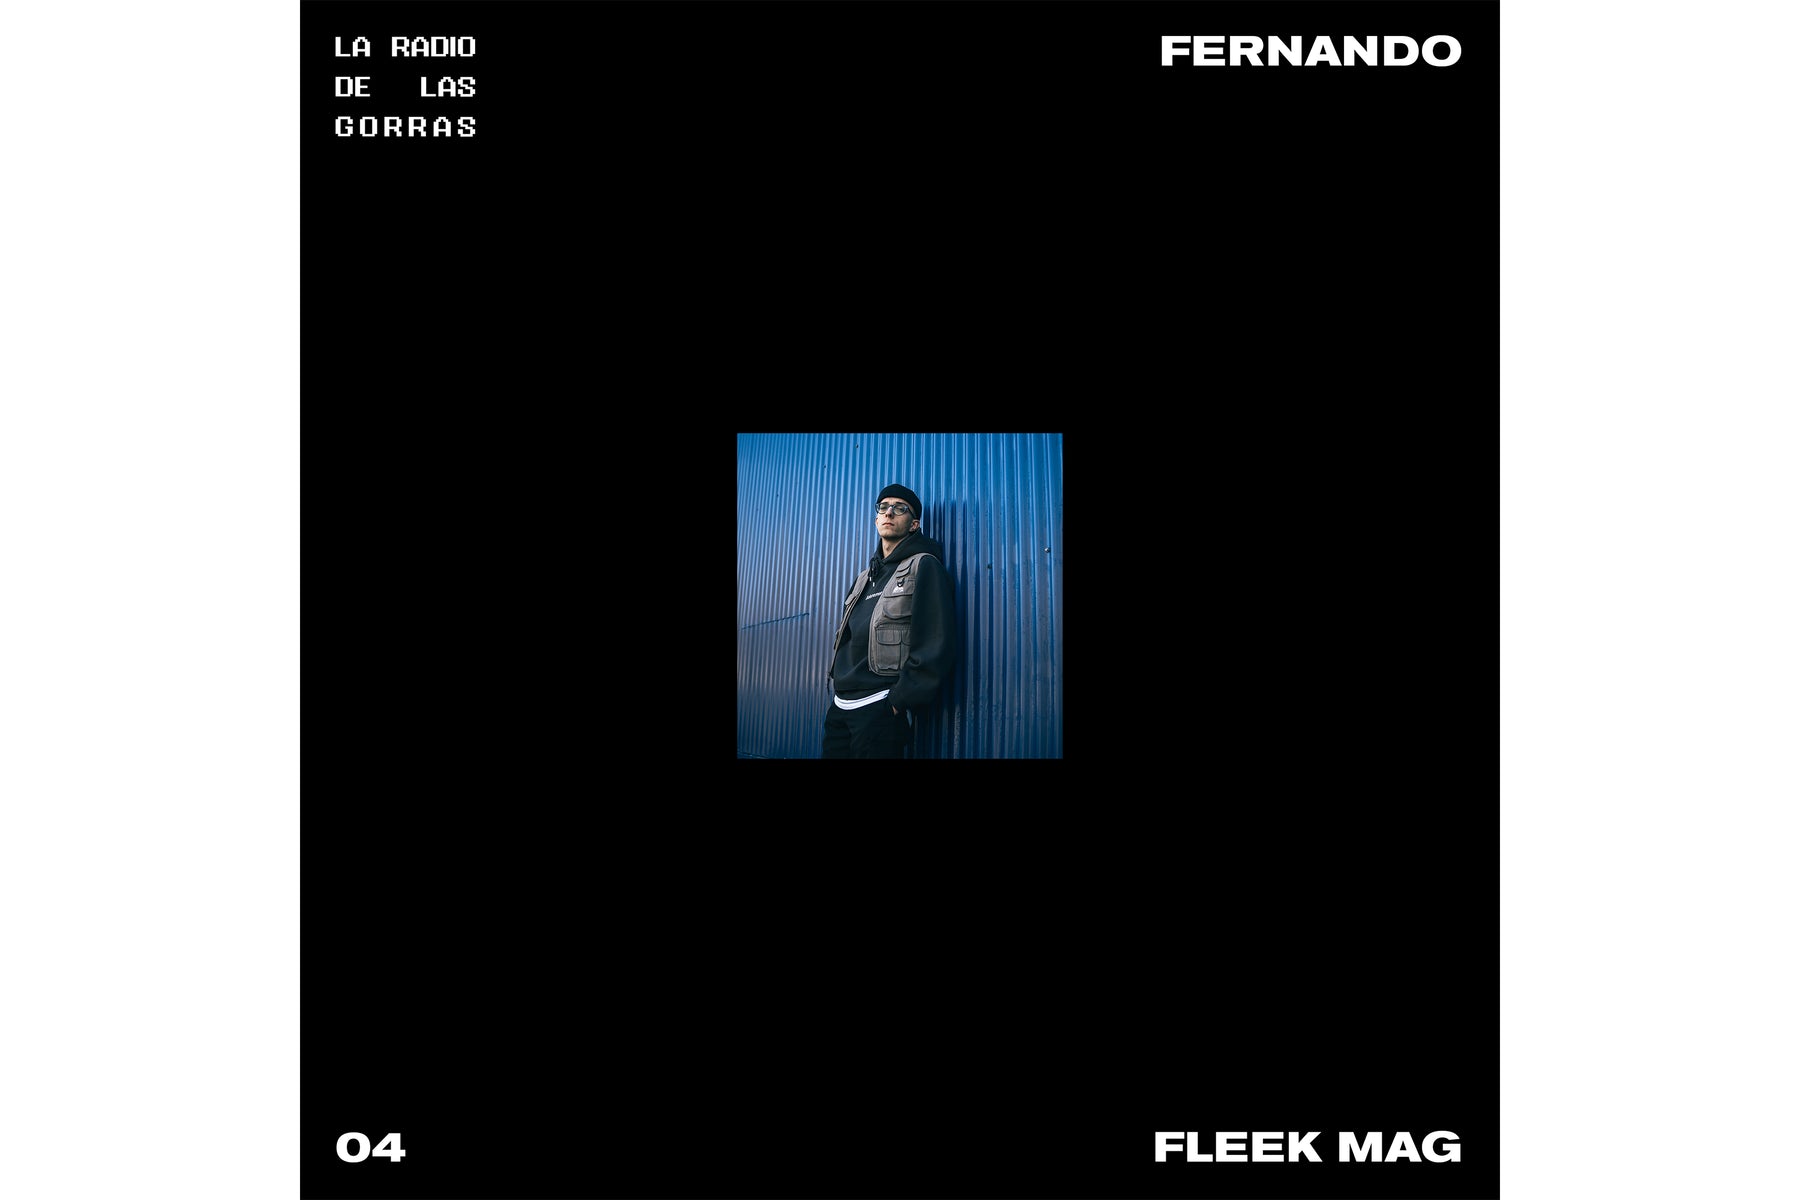 LA RADIO DE LAS GORRAS 04 - FERNANDO (FLEEK MAG)